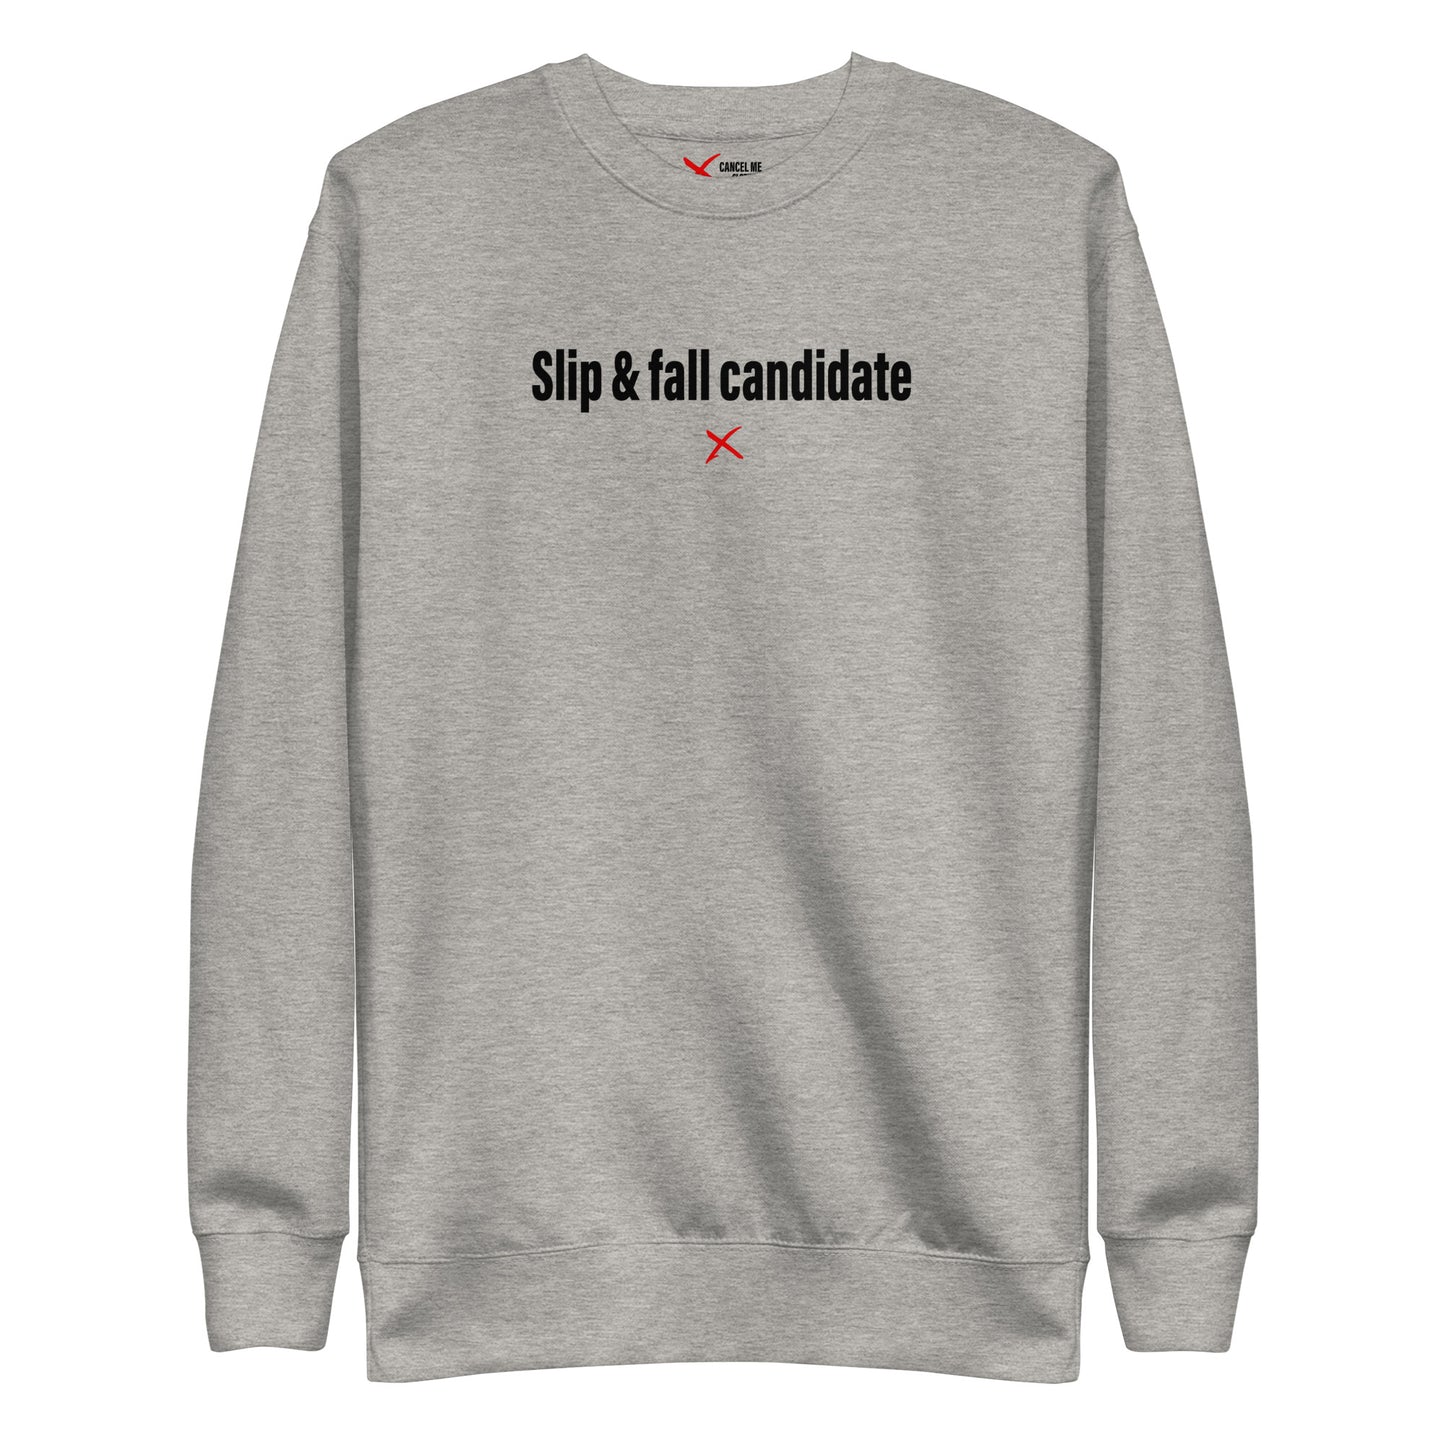 Slip & fall candidate - Sweatshirt